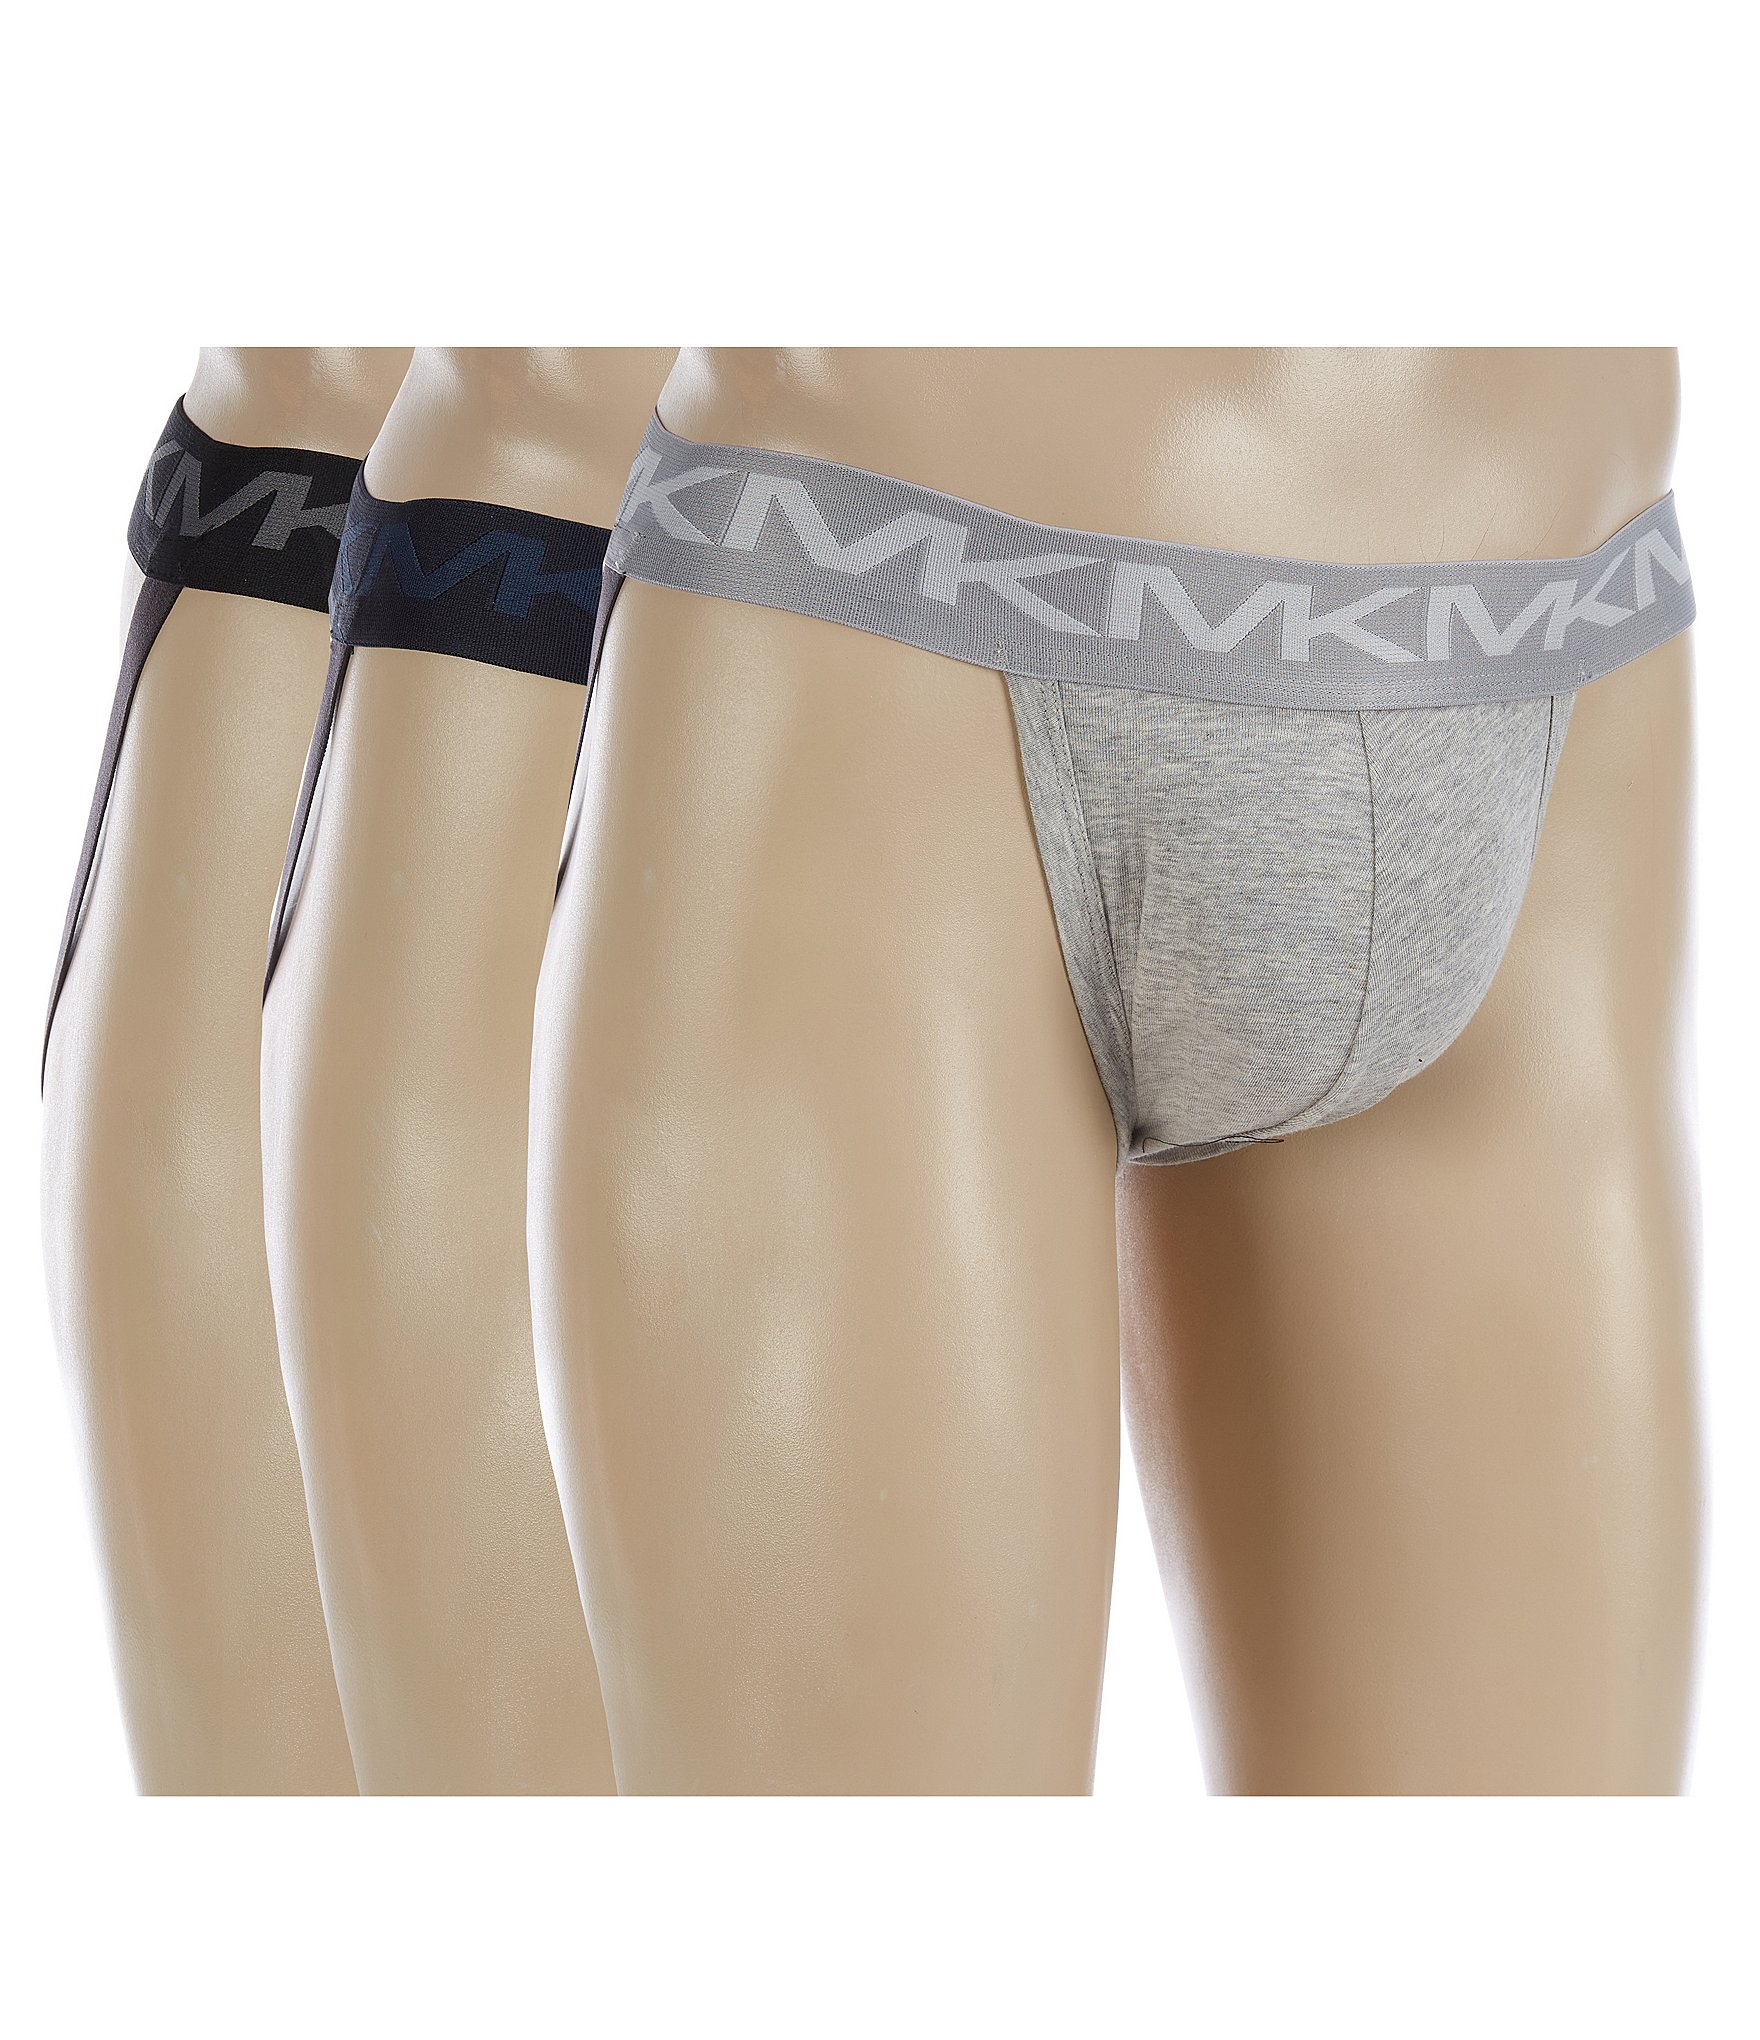 Michael Kors Men's Underwear And Socks